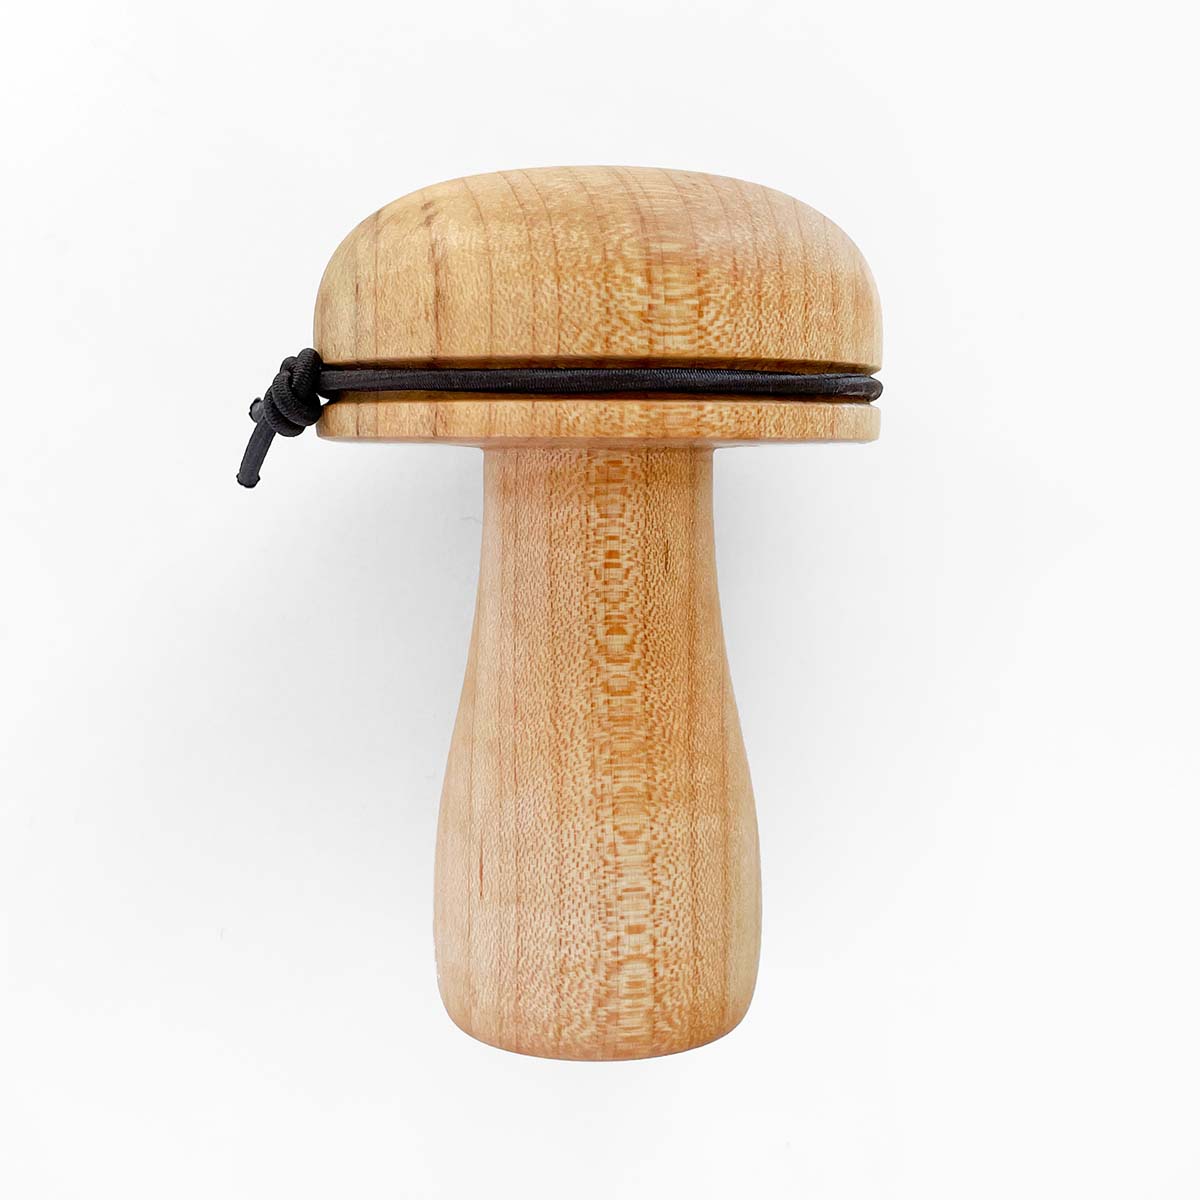 Wood darning mushroom